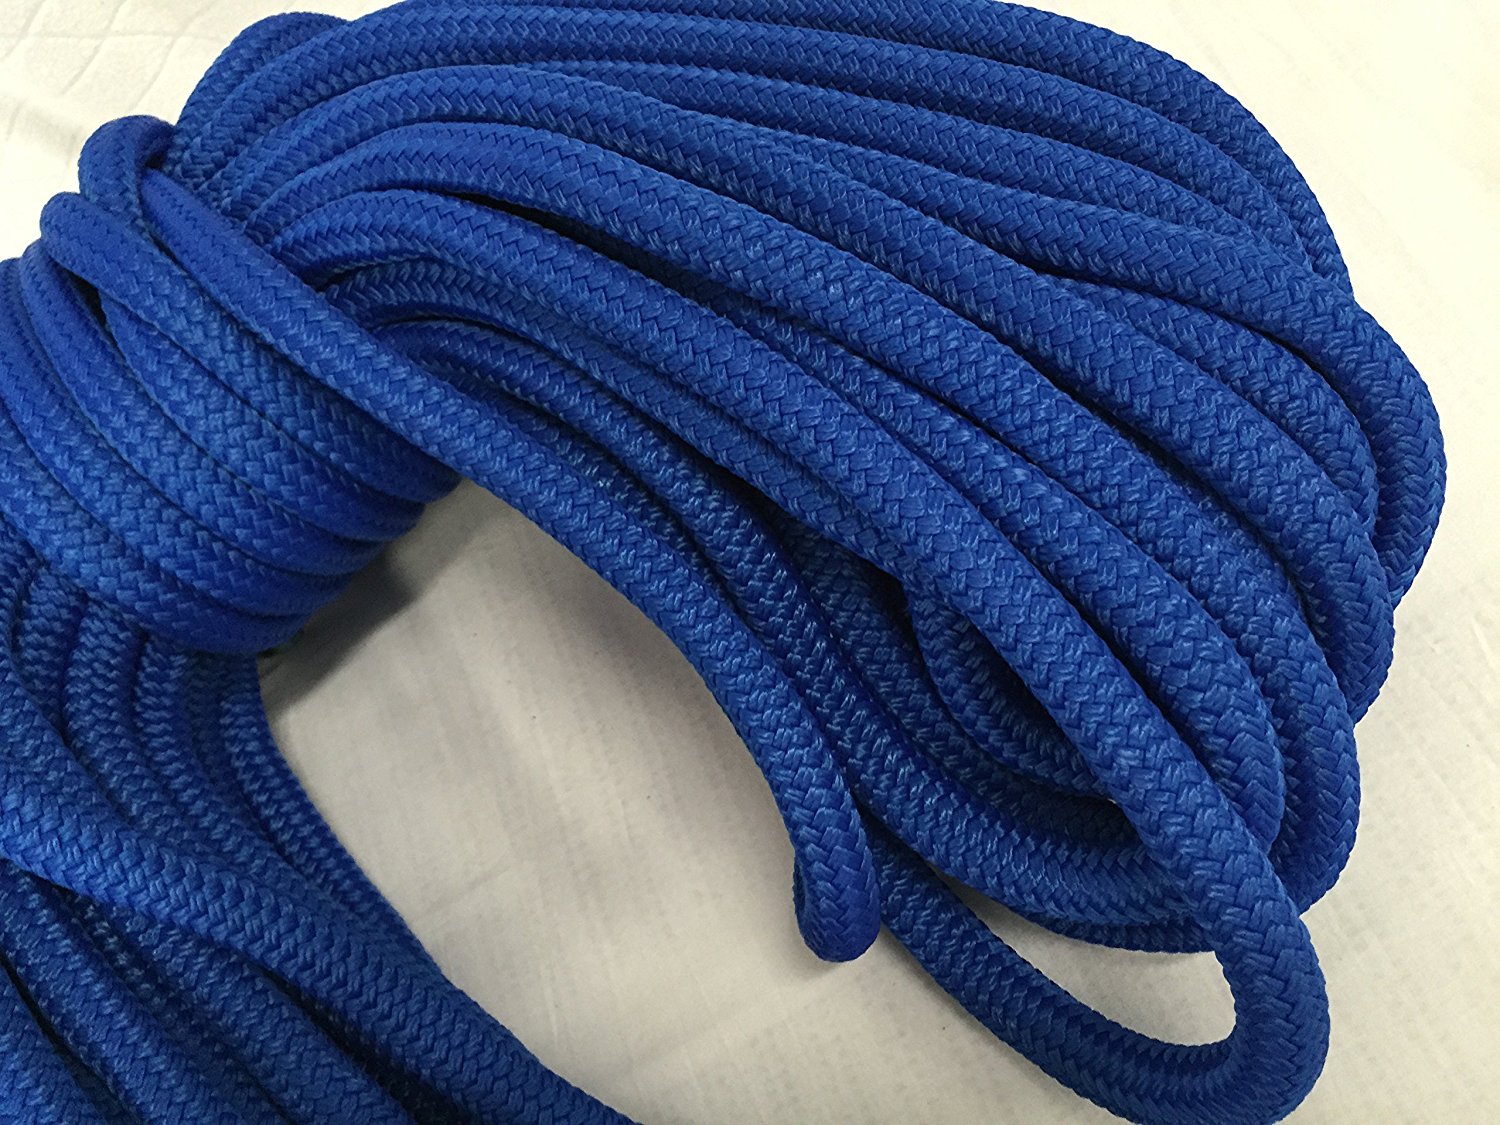 5/8 Double Braided Nylon Rope, Blue, 100 ft 